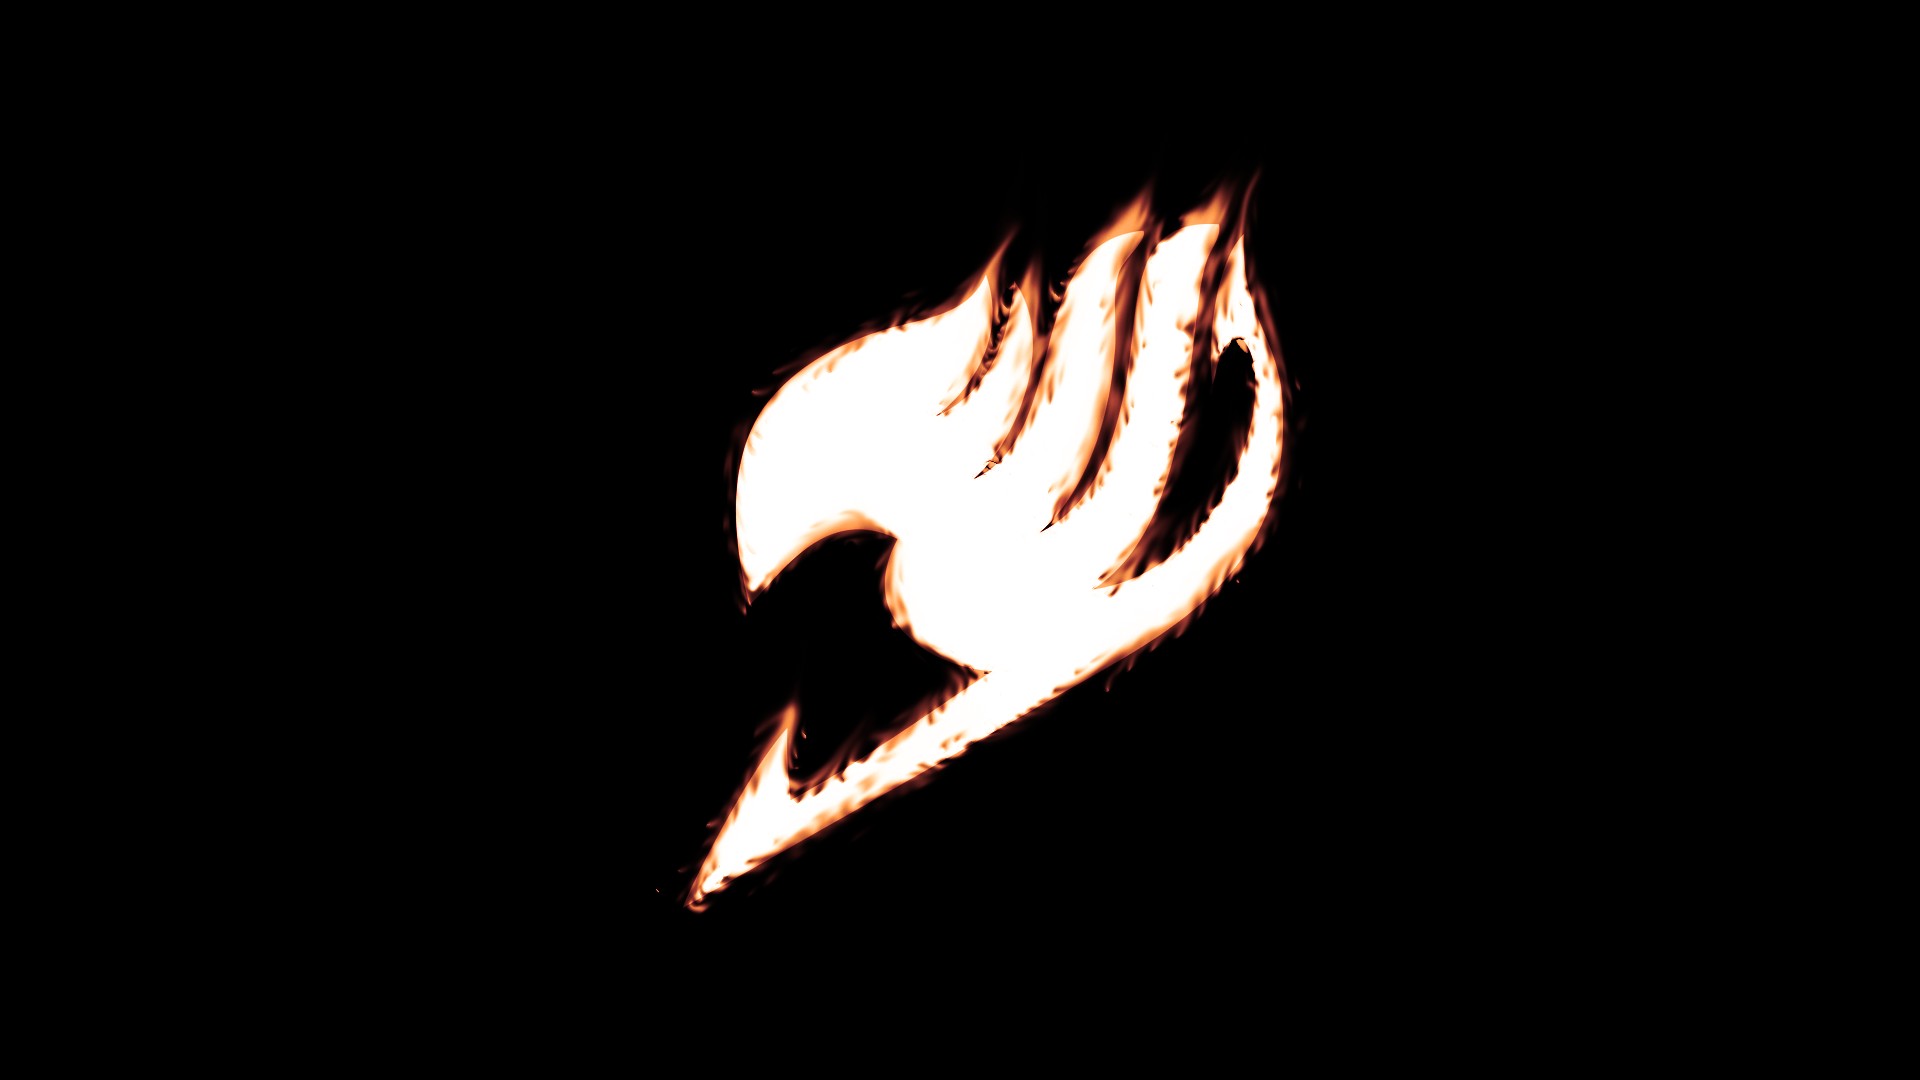 fairy tail logo tapete,flamme,hitze,feuer,dunkelheit,symbol